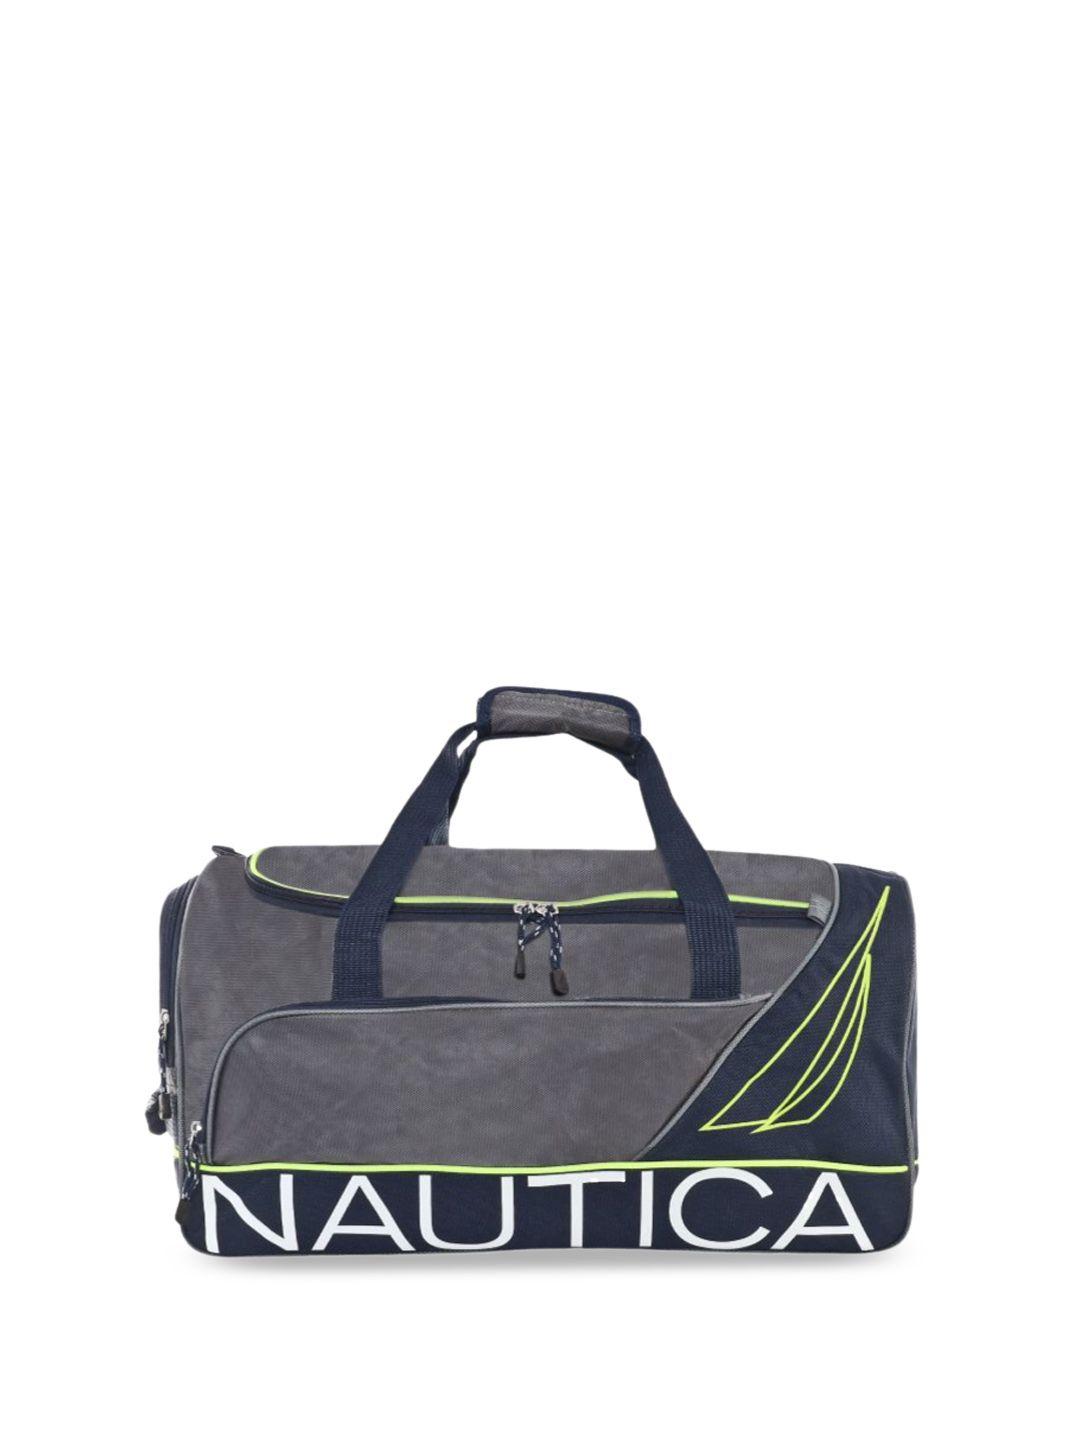 nautica medium size duffel bag